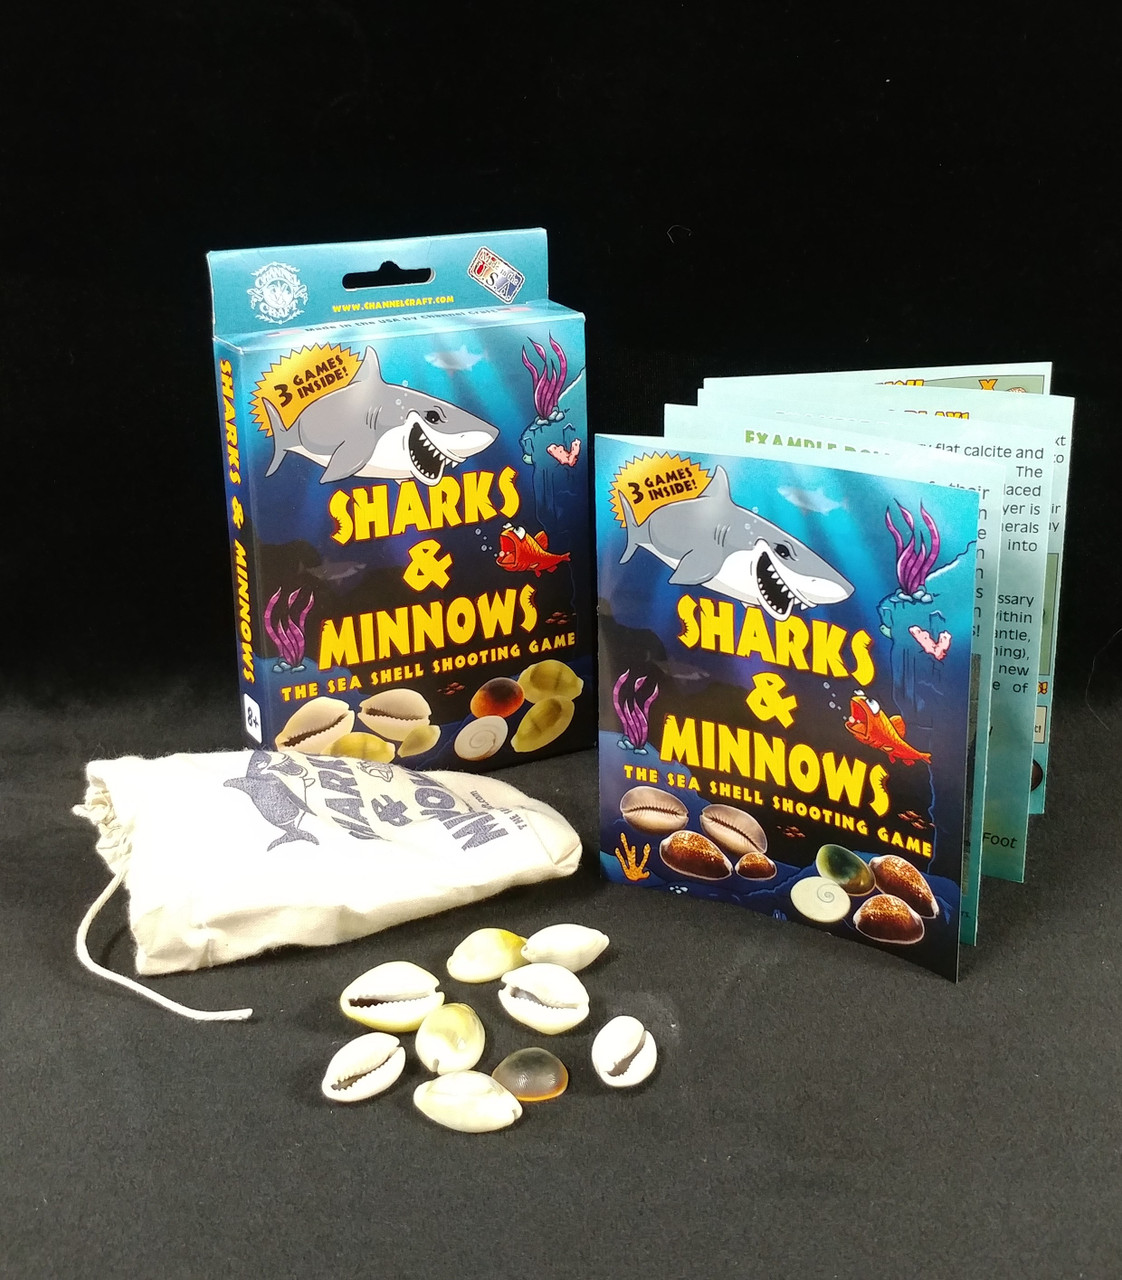 Sharks and Minnows Sea Shell Shooting Game